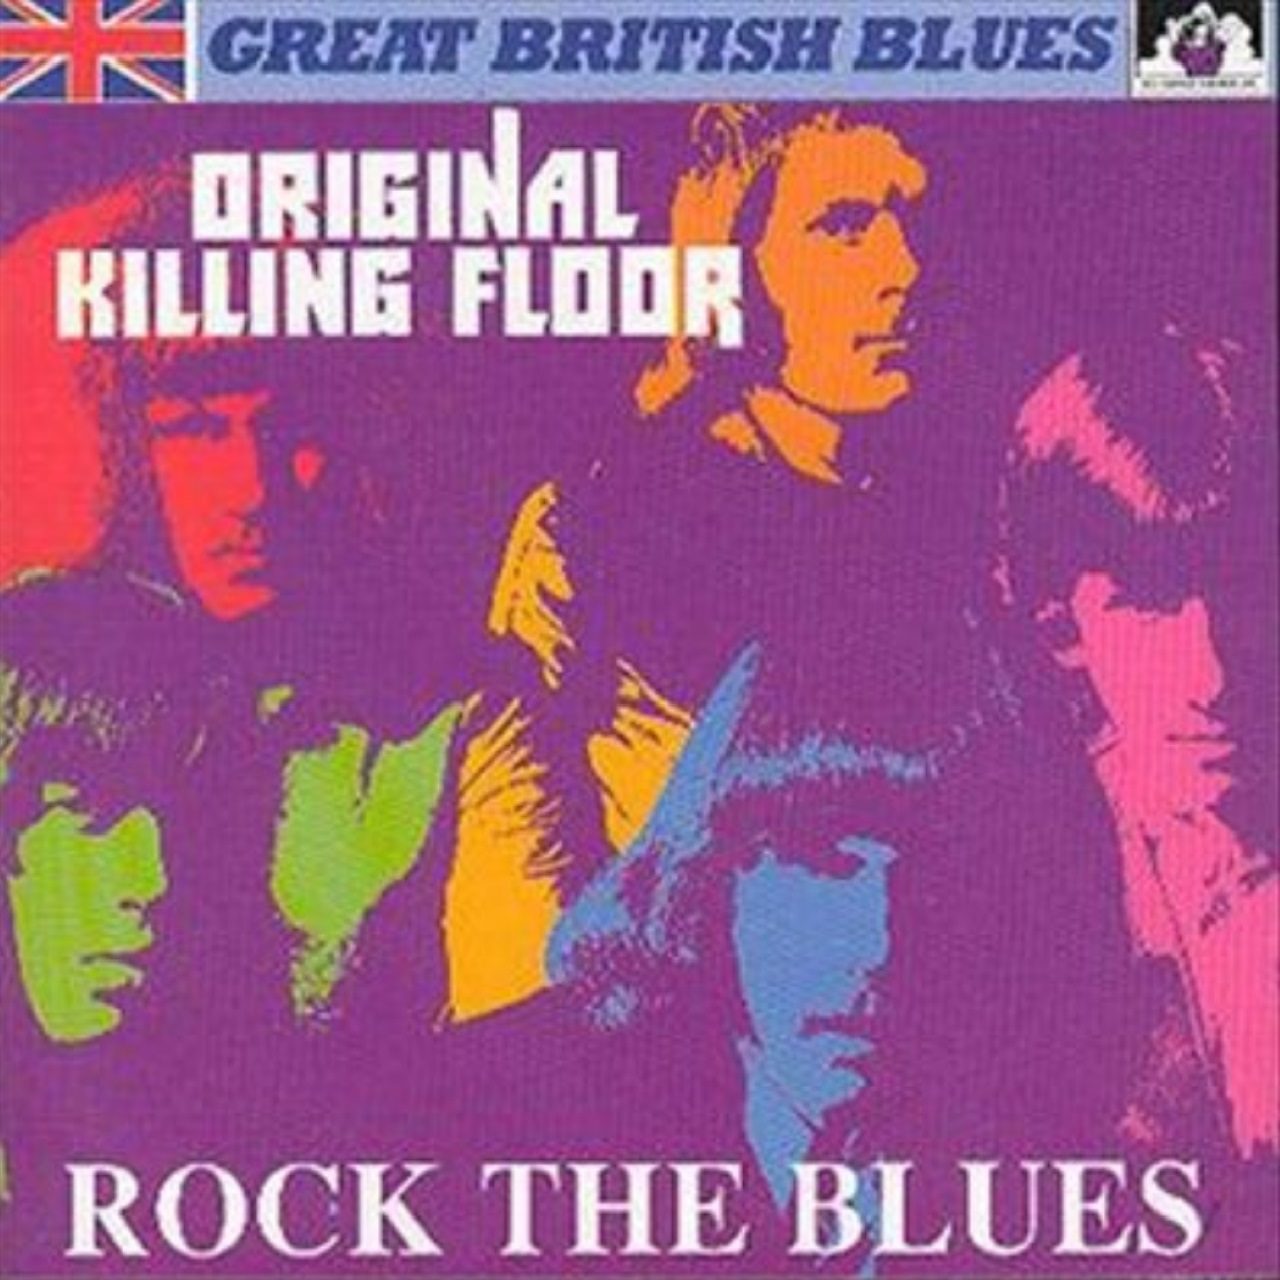 Killing Floor – Rock The Blues cover album